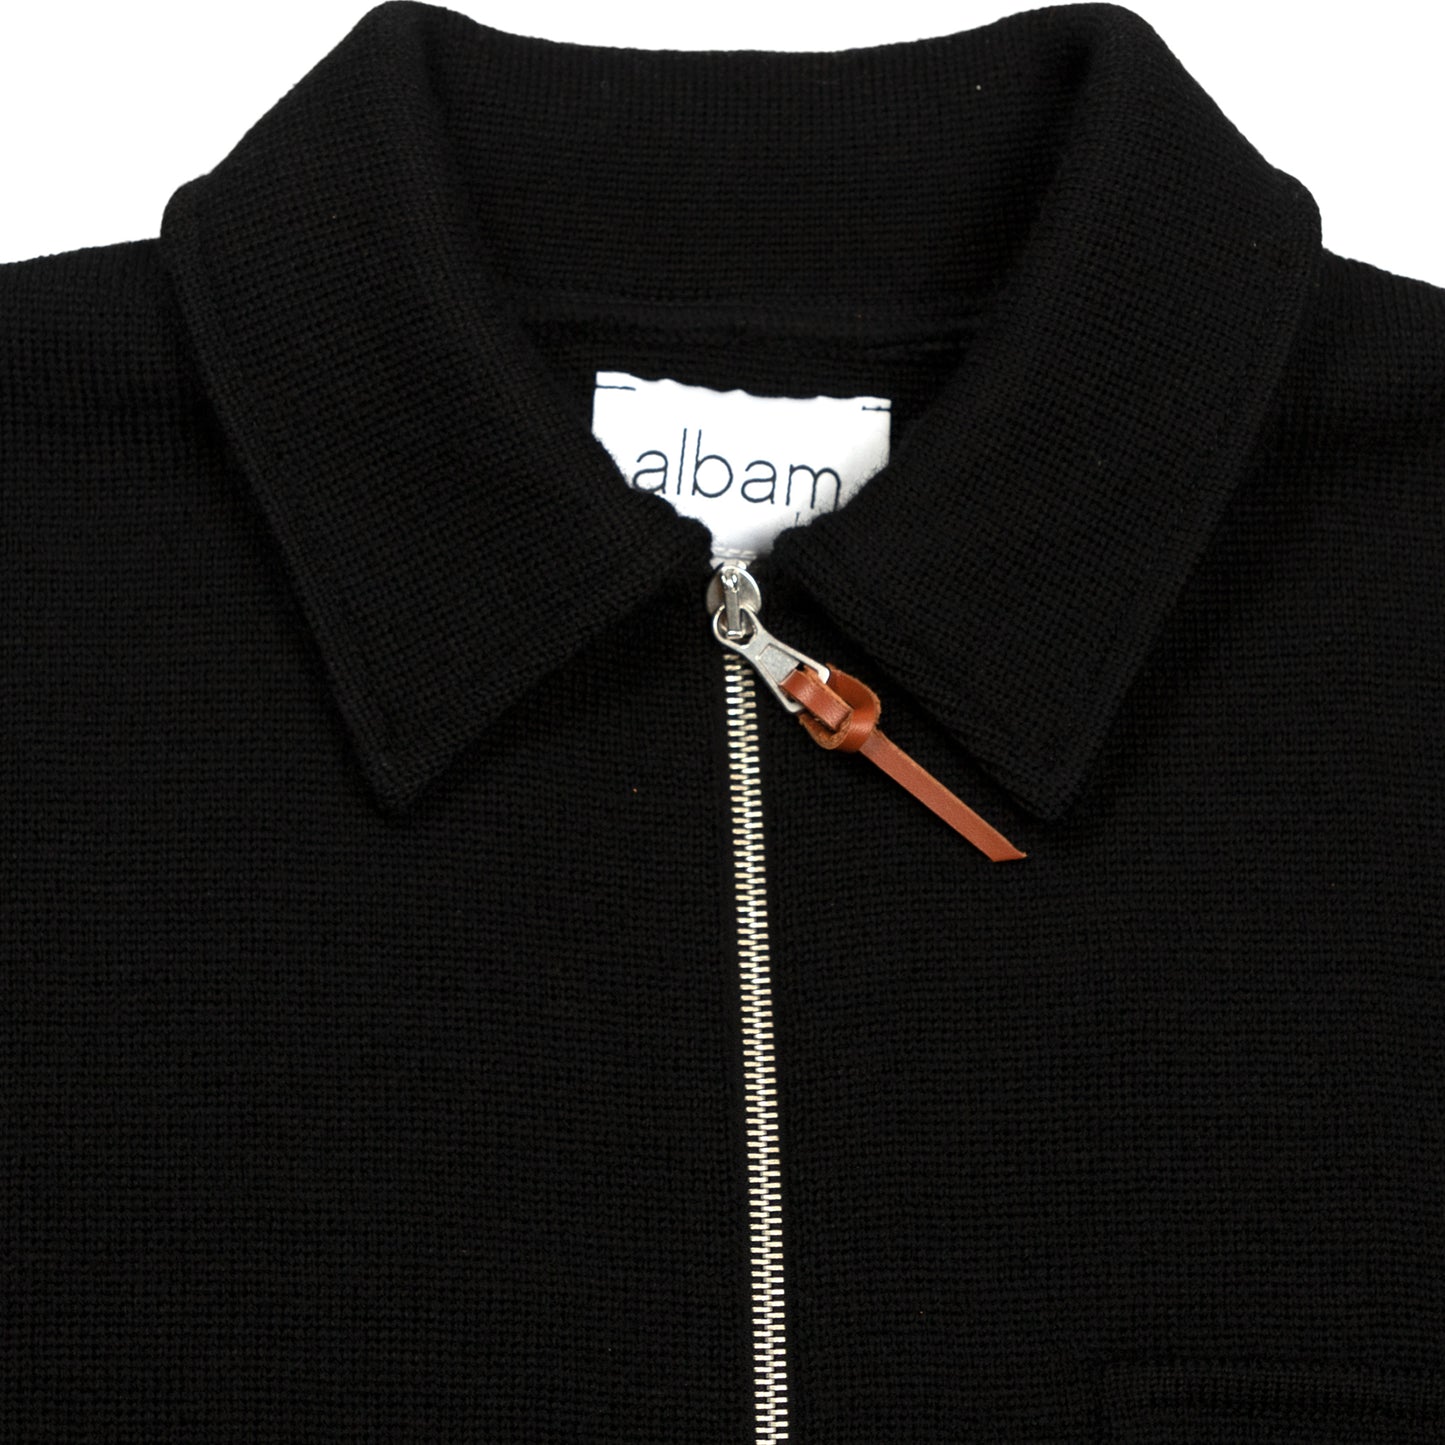 Albam Milano Zip Through Work Jacket Outerwear Sweater Black Detail Collar